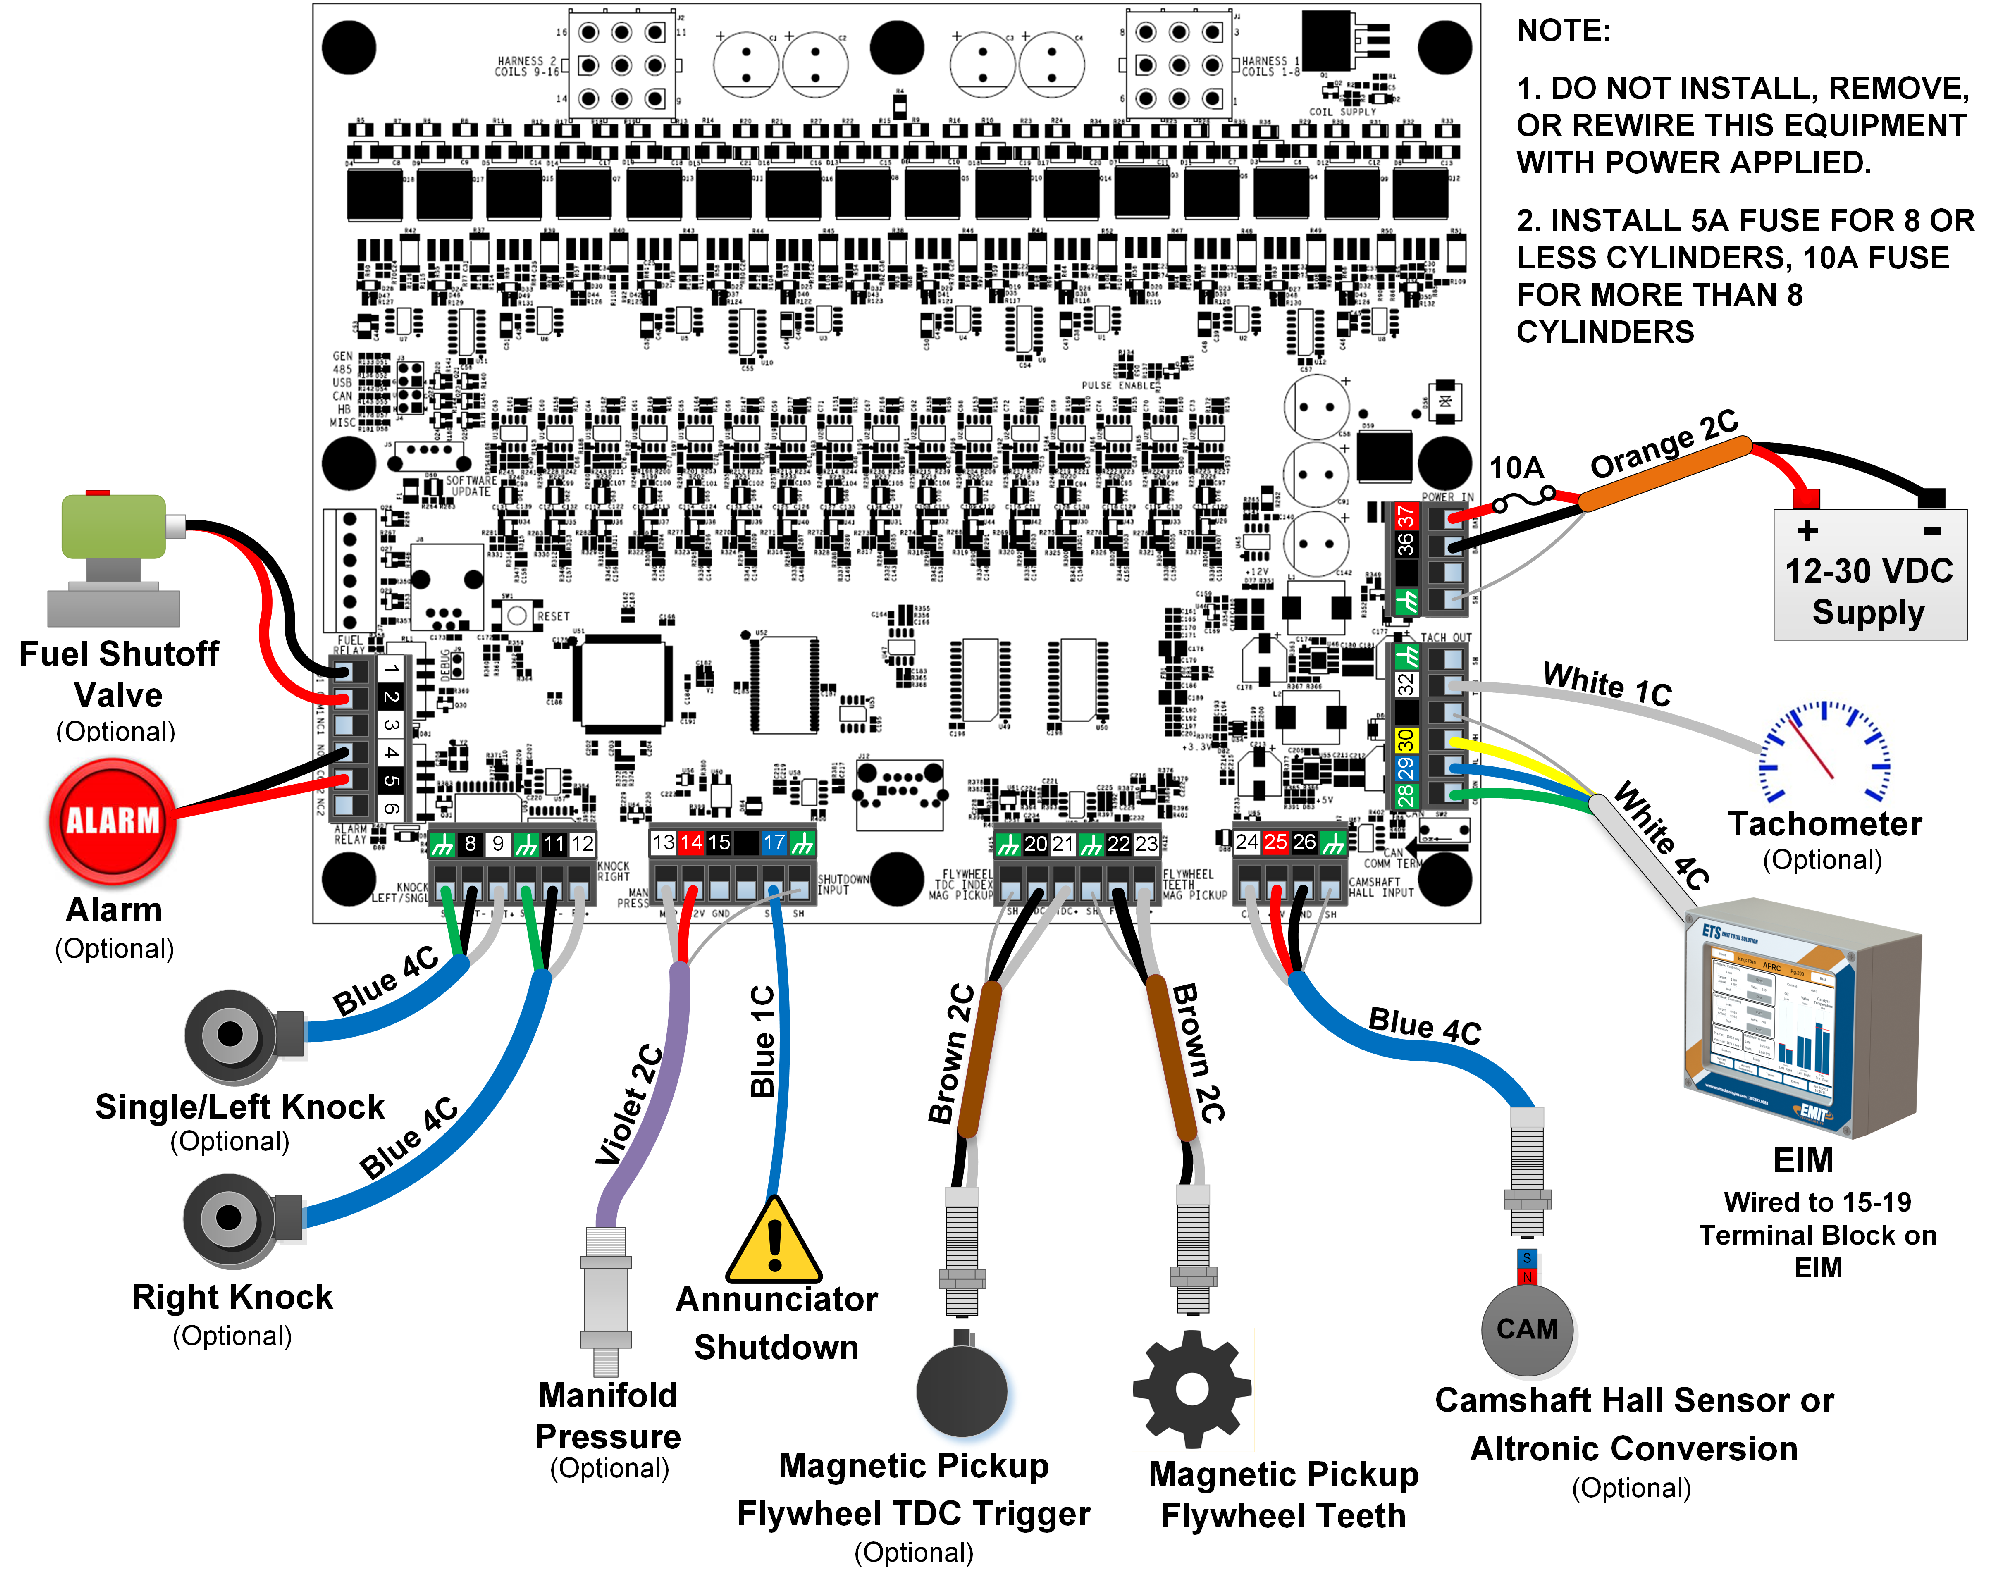 ICM1 wiring diagramb.png